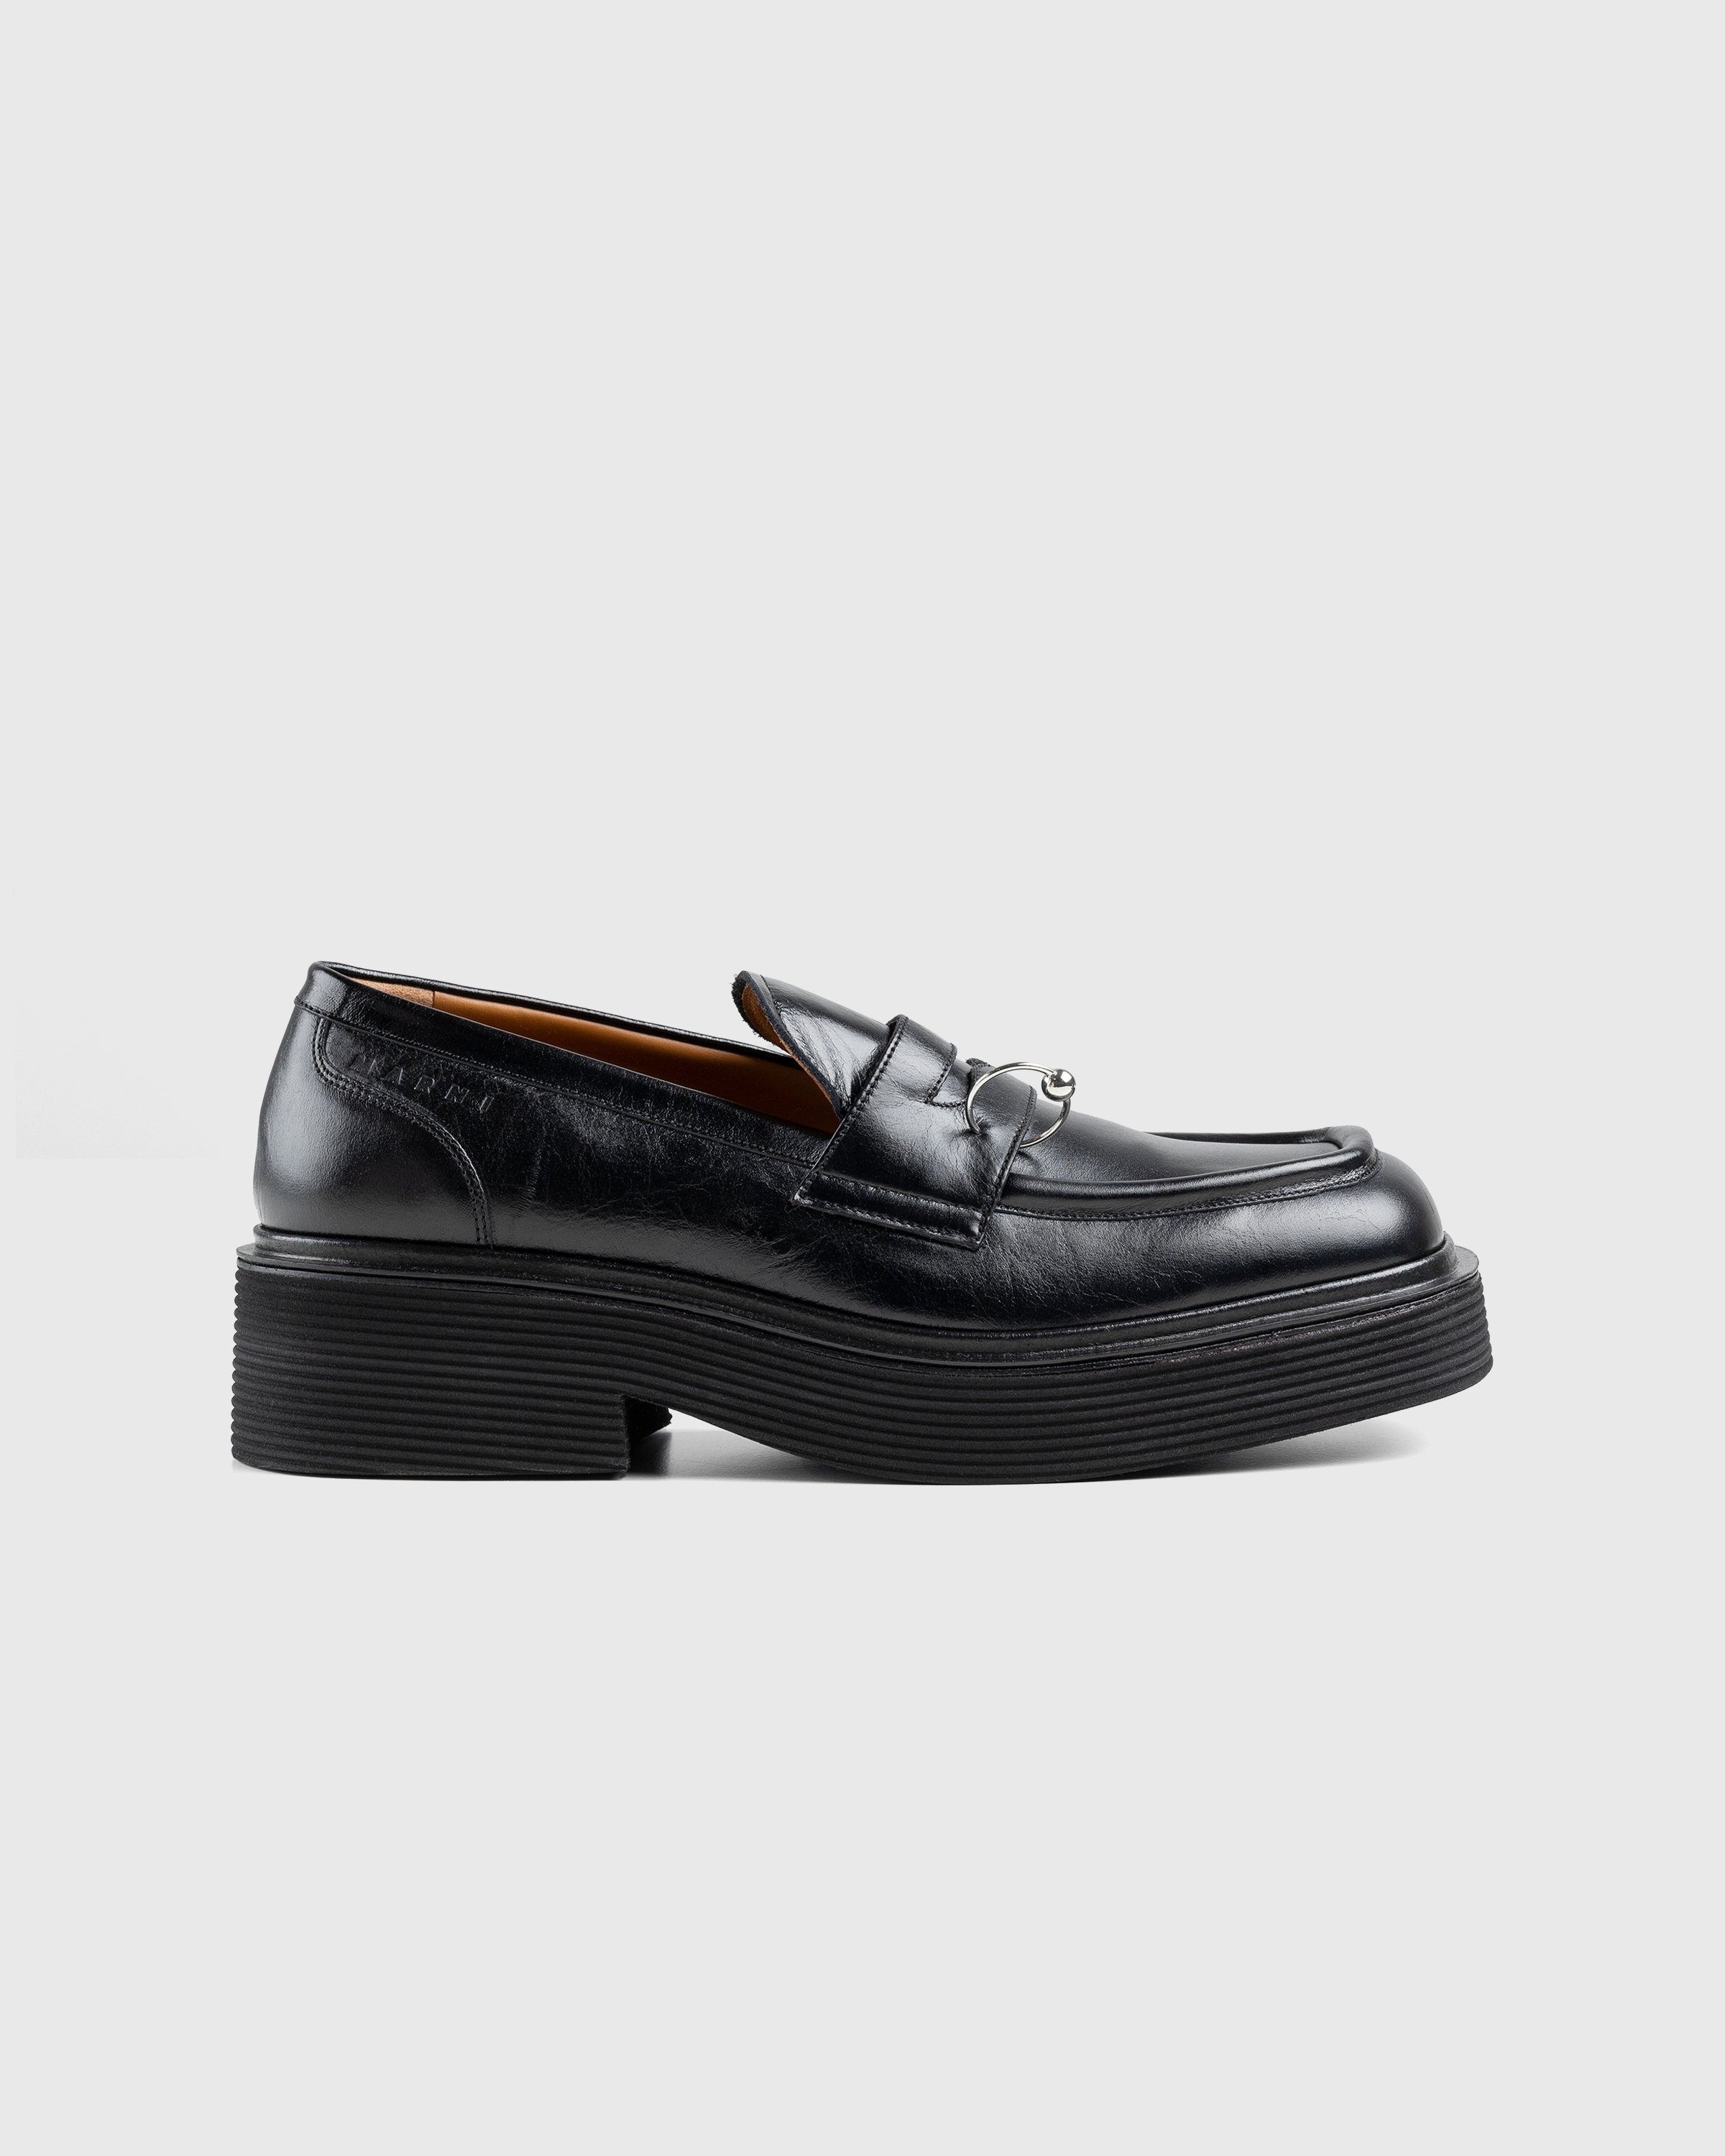 Marni – Shiny Leather Moccasin Black - Loafers - Black - Image 1